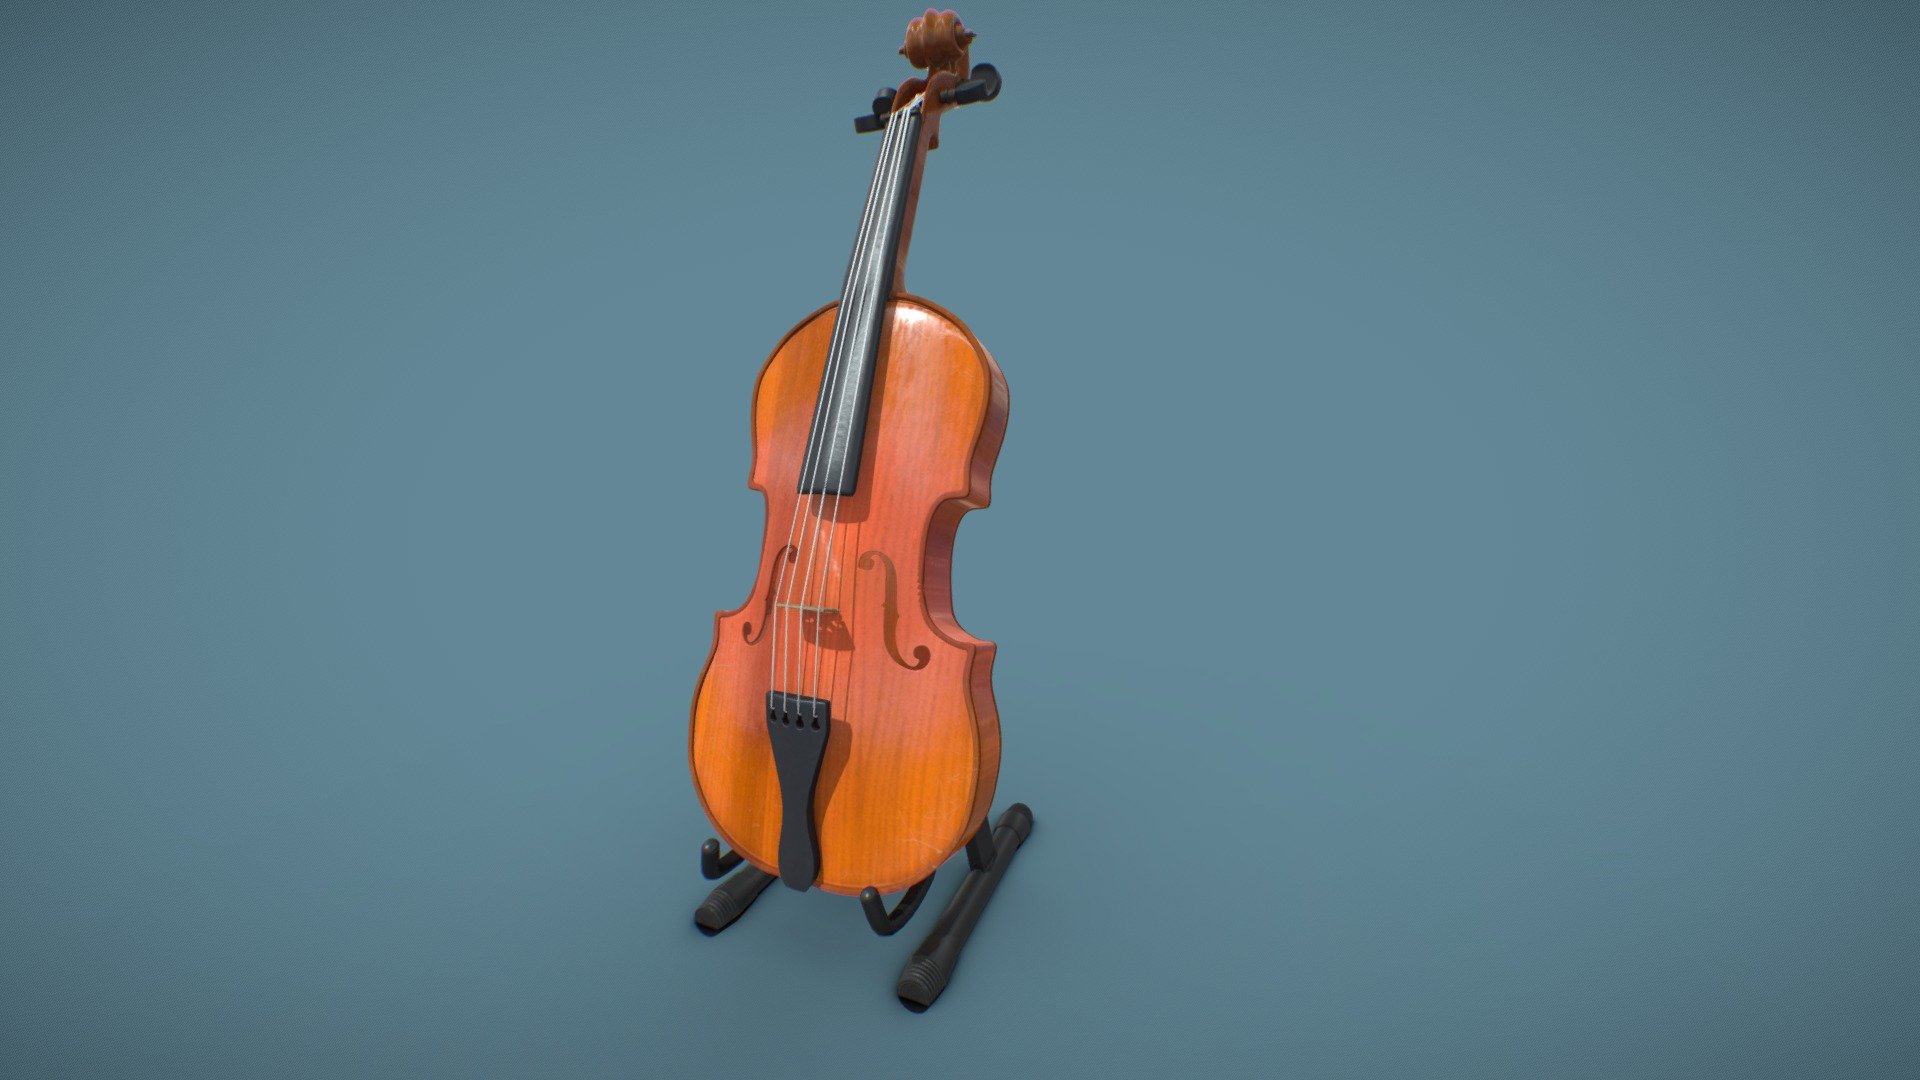 Violin Fixed 3d Model By Yuvalmarko Yusdho1 [6d3a272] Sketchfab